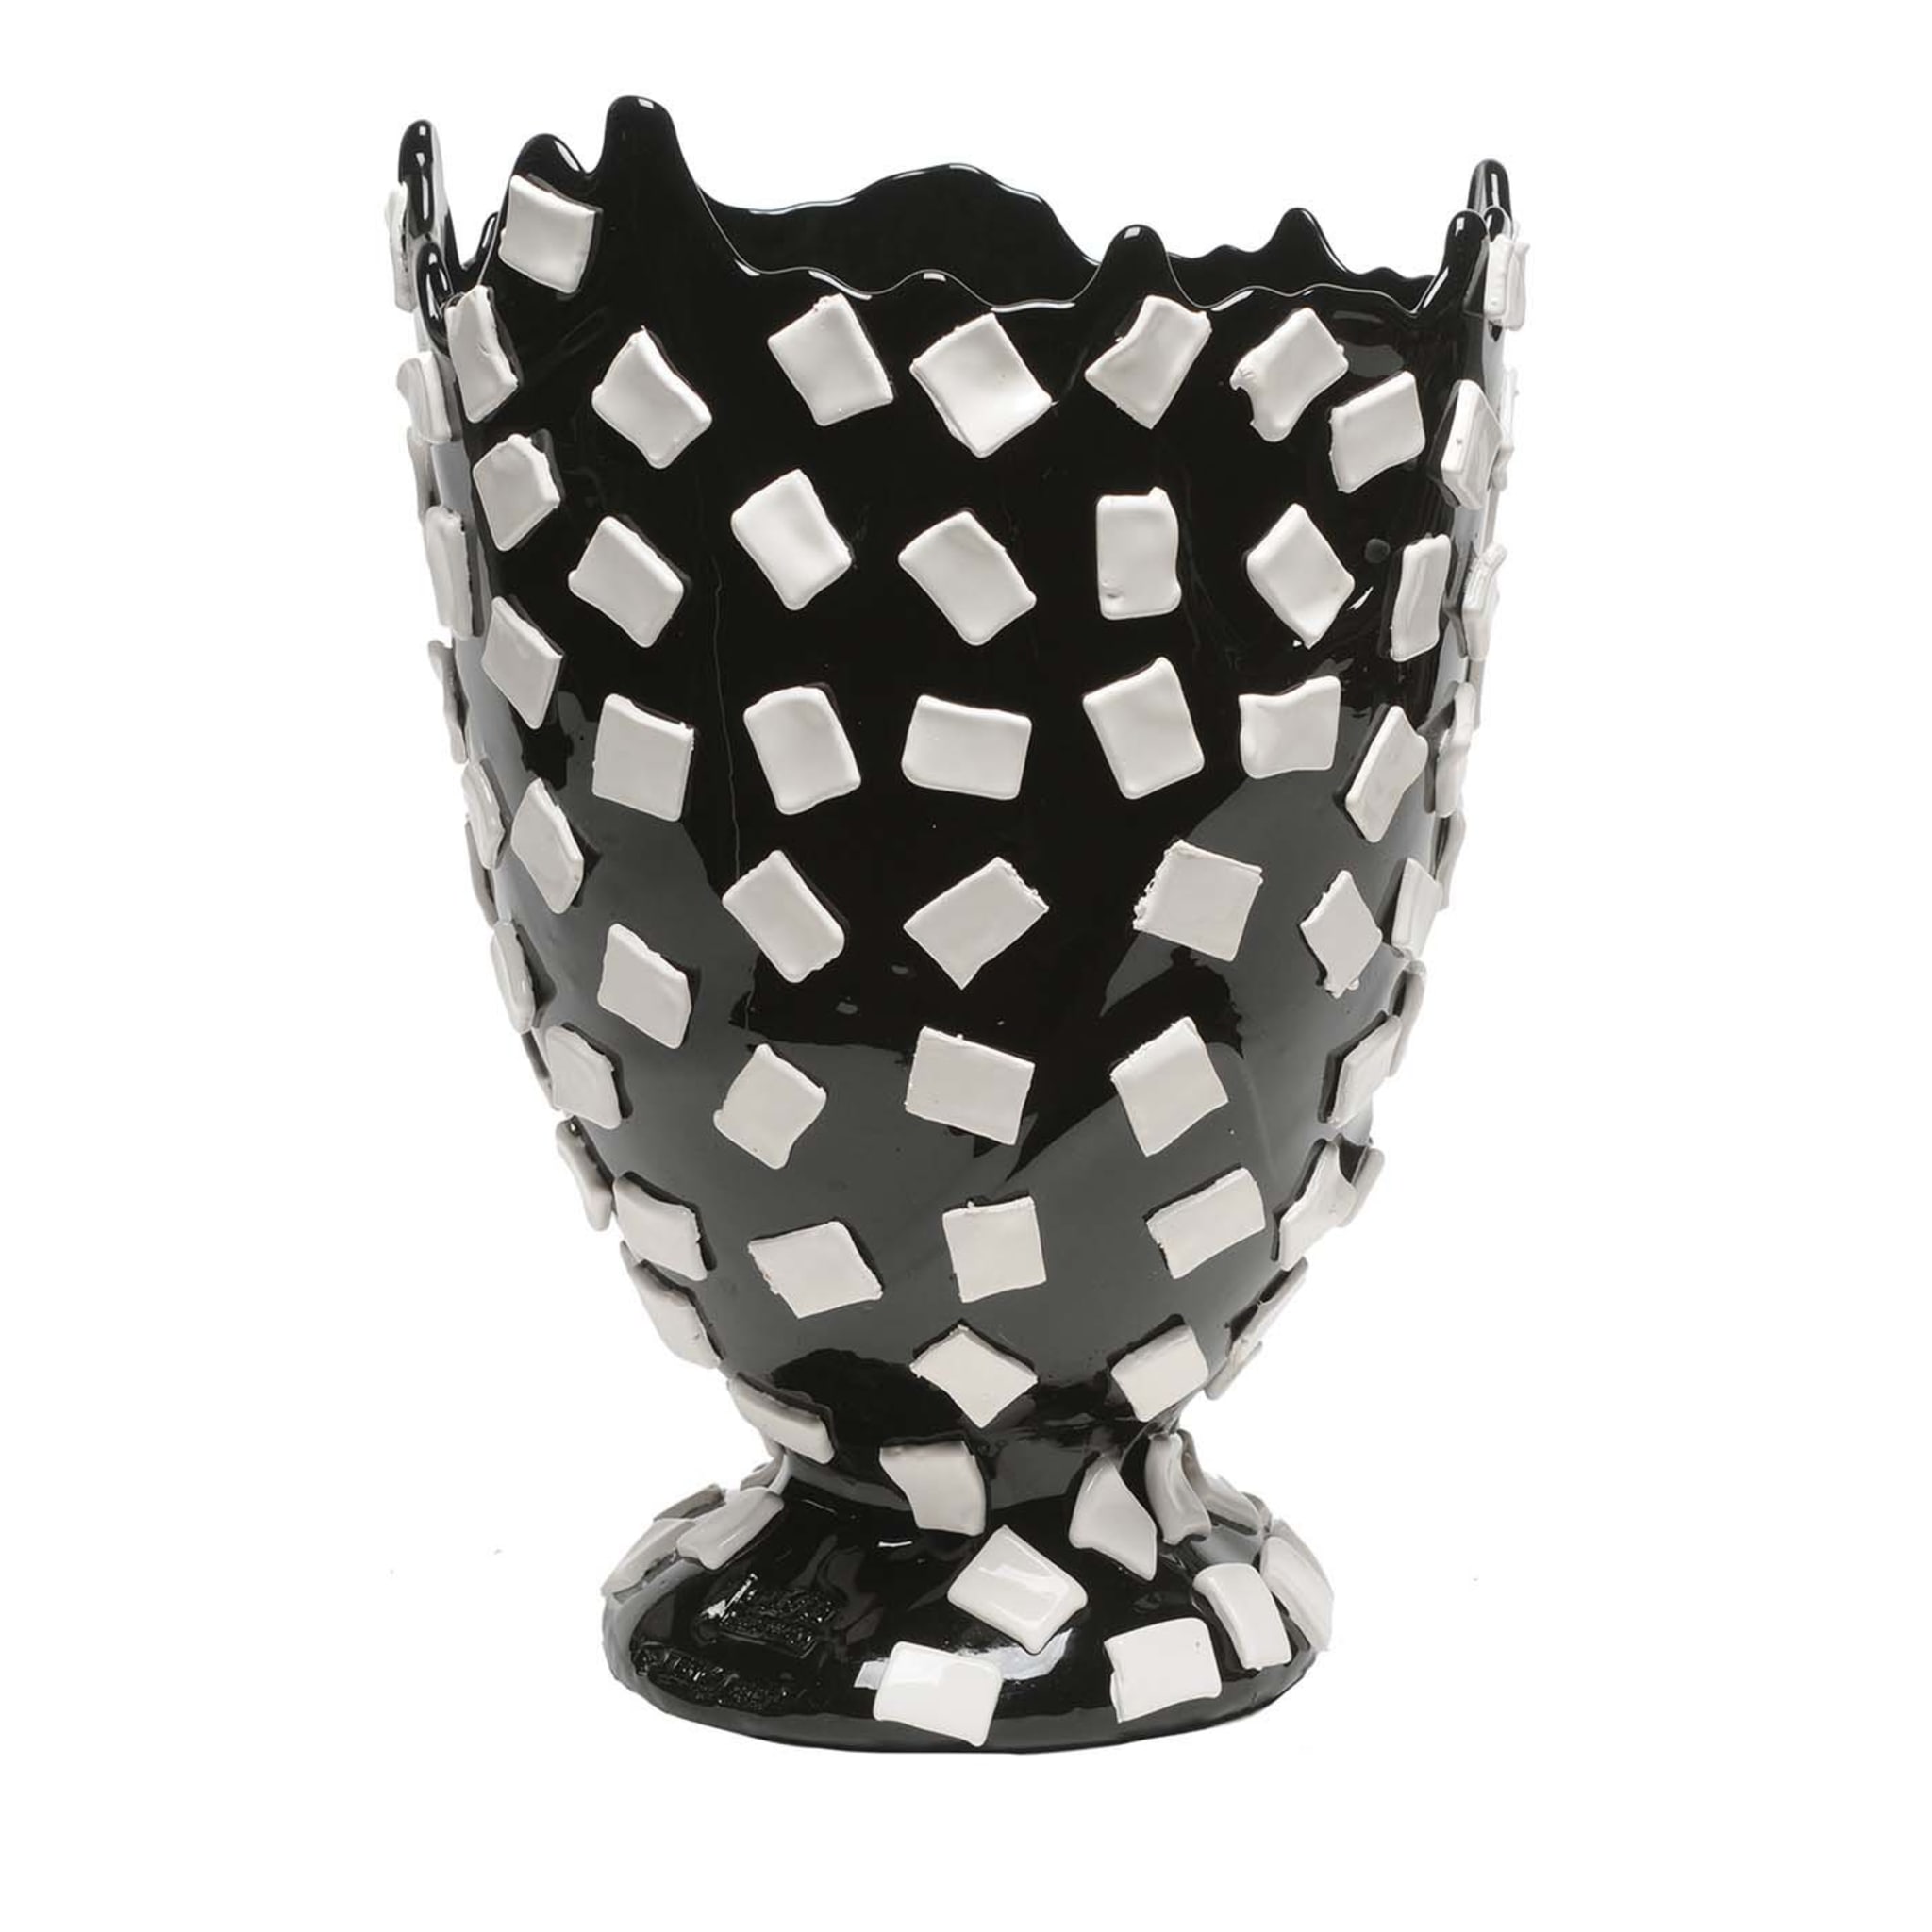 Grand vase Rock noir et blanc de Gaetano Pesce - Vue principale